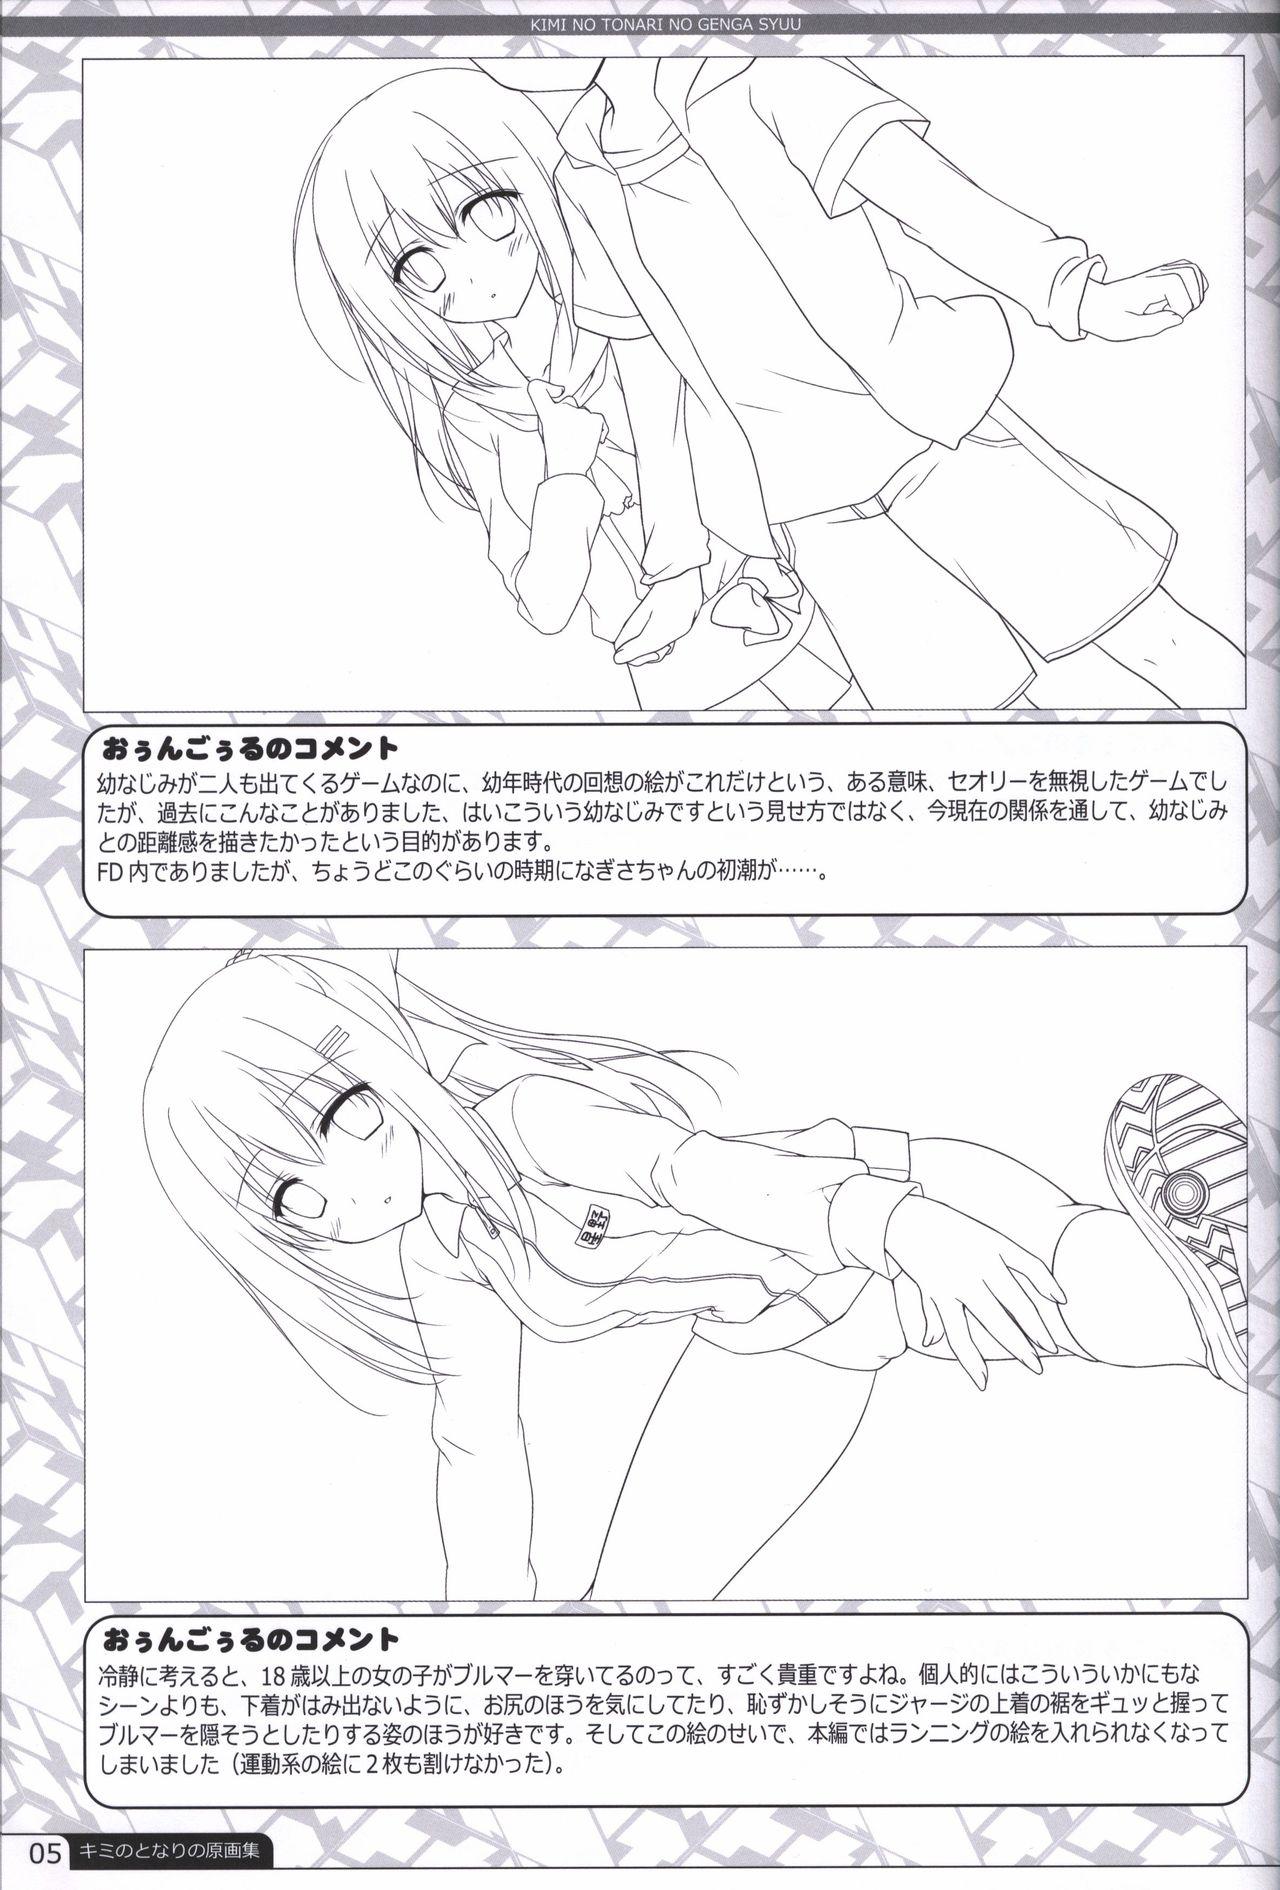 Leggings Kimi no Tonari no illustration art book Humiliation - Page 4